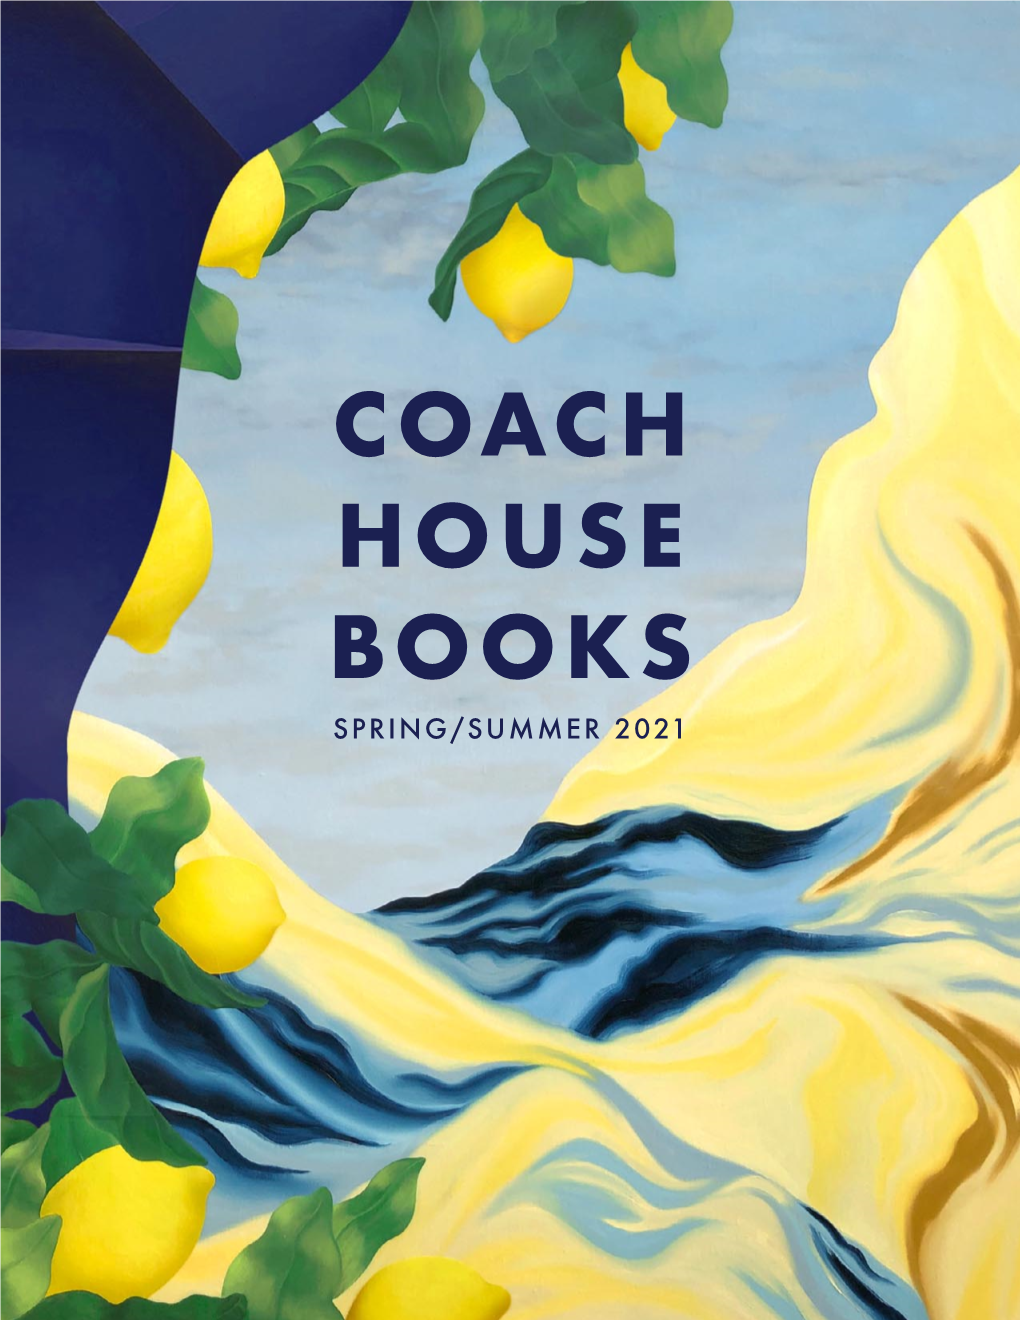 Spring/Summer 2021 Coach House Books